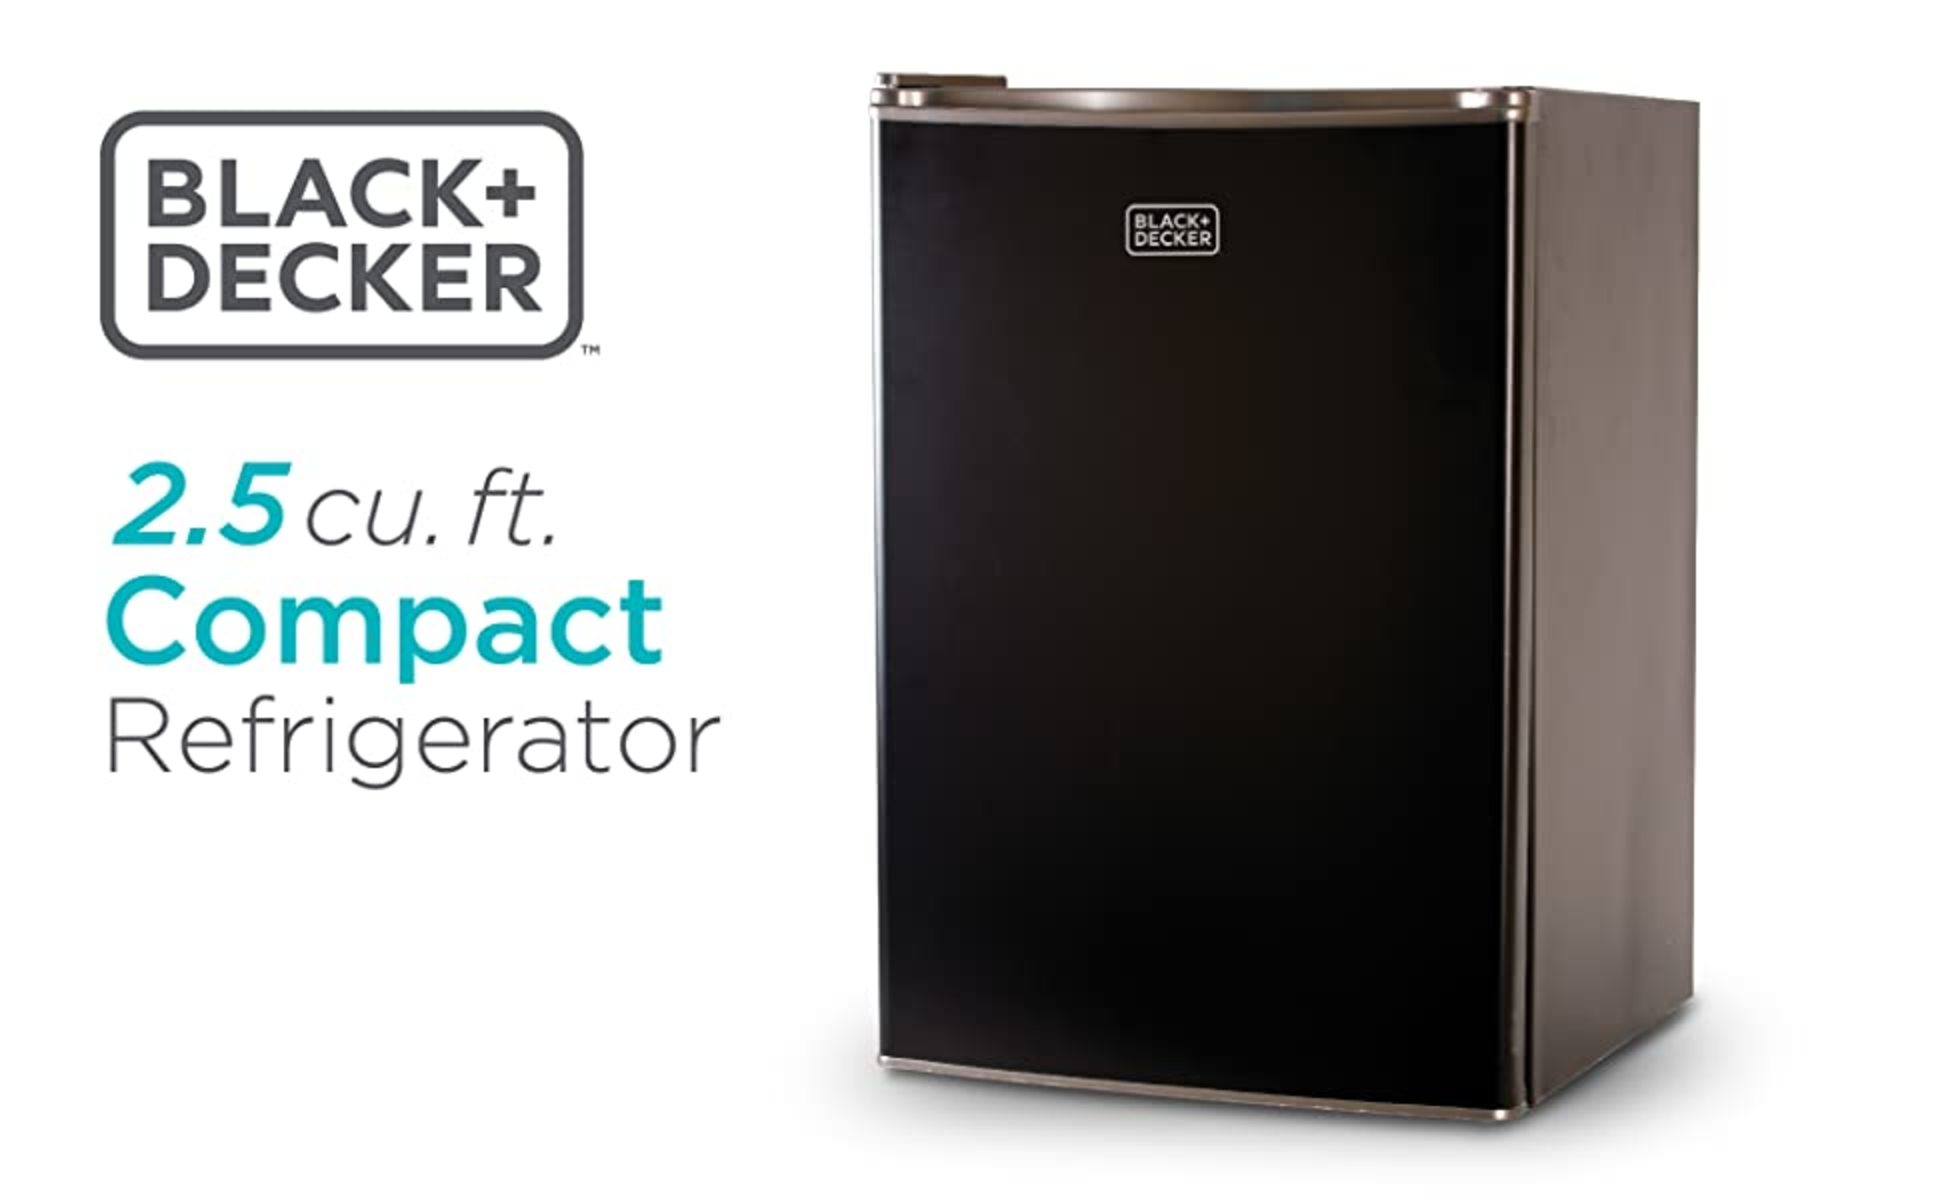 BLACK+DECKER BCRK25 2.5 Cu. Ft. Compact Refrigerator with Freezer - Black